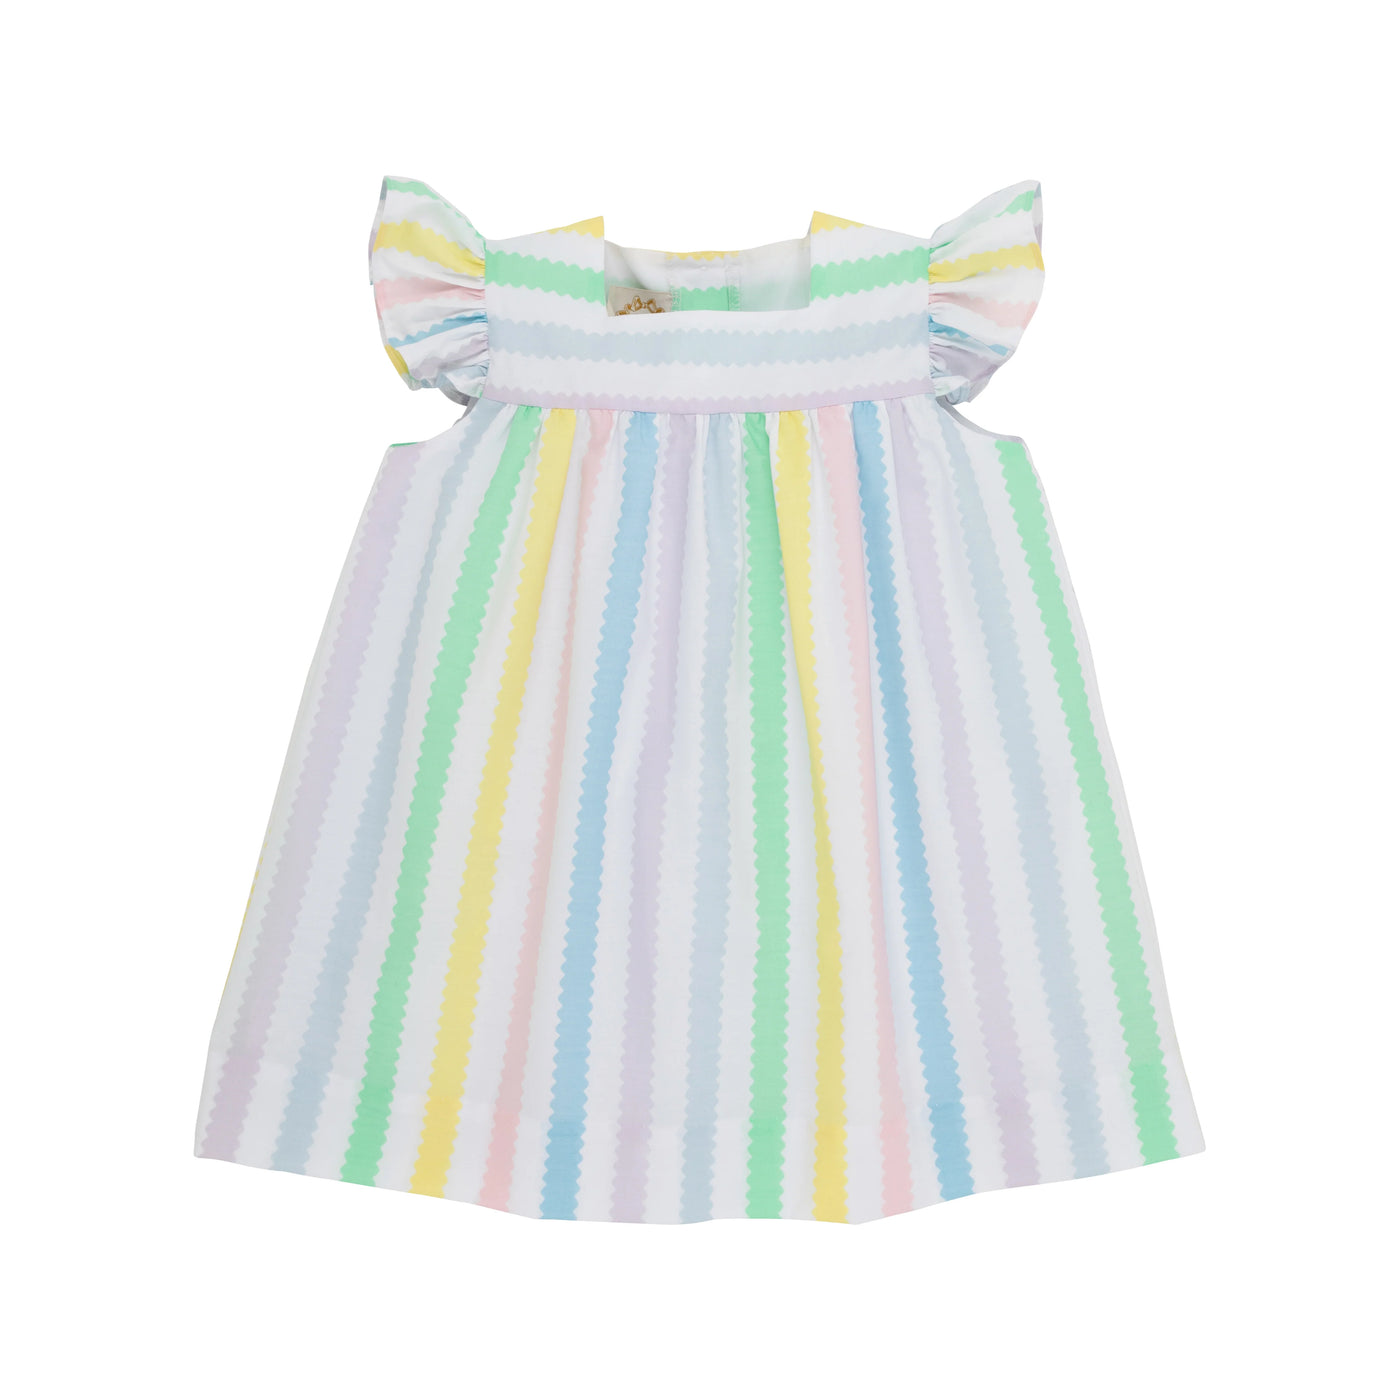 Rosemary Ruffle Dress - Wellington Wiggle Stripe - Breckenridge Baby